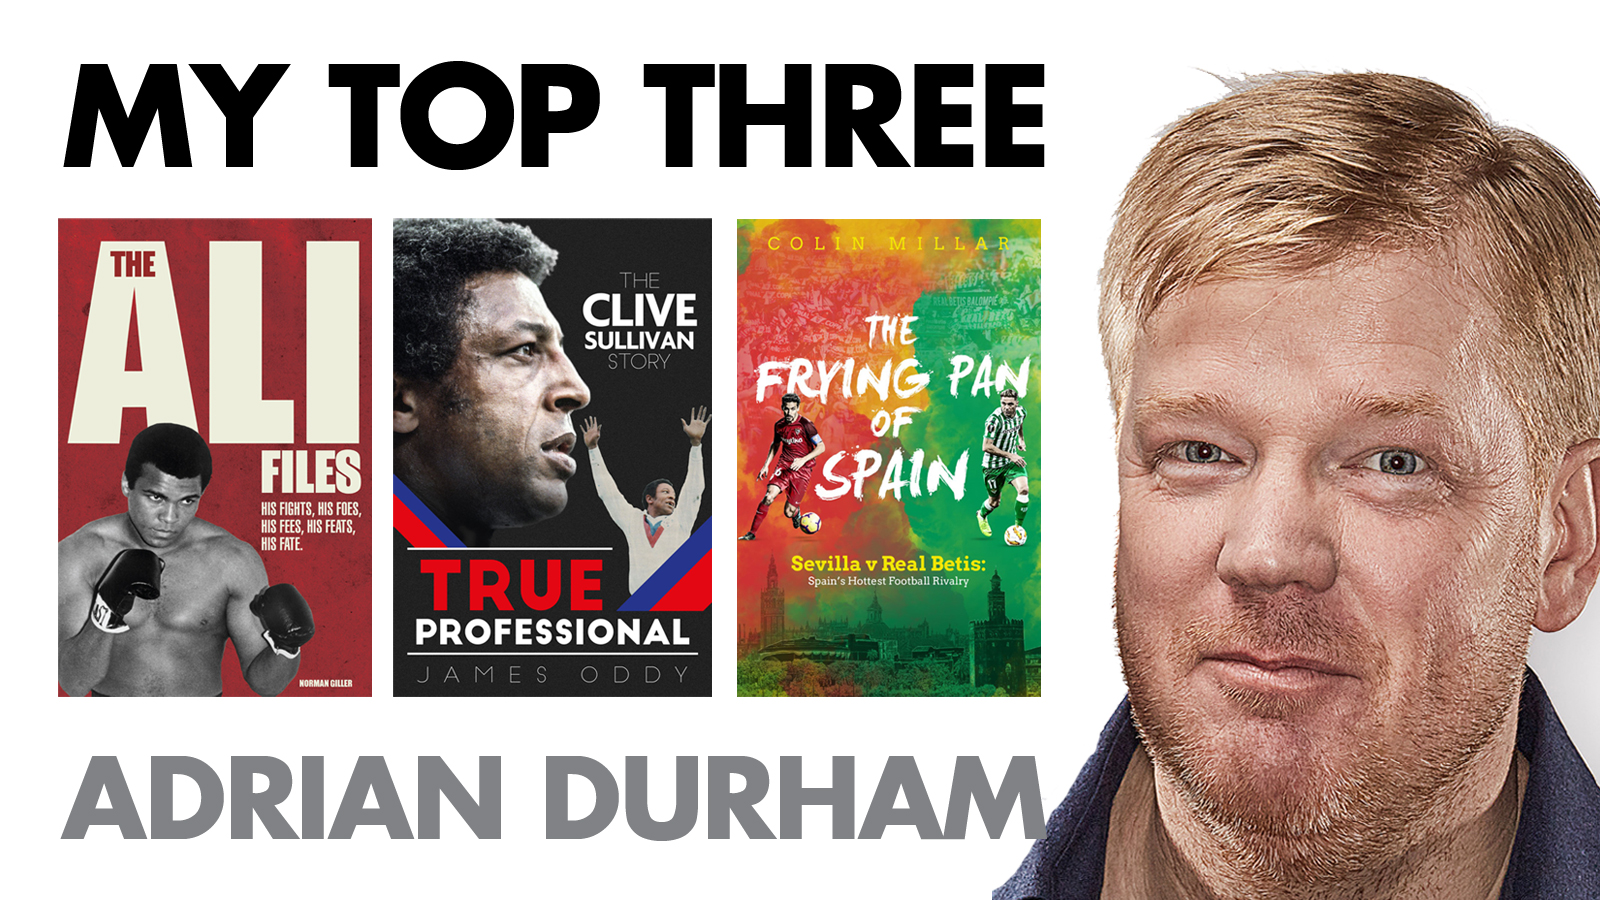 MY TOP THREE: ADRIAN DURHAM